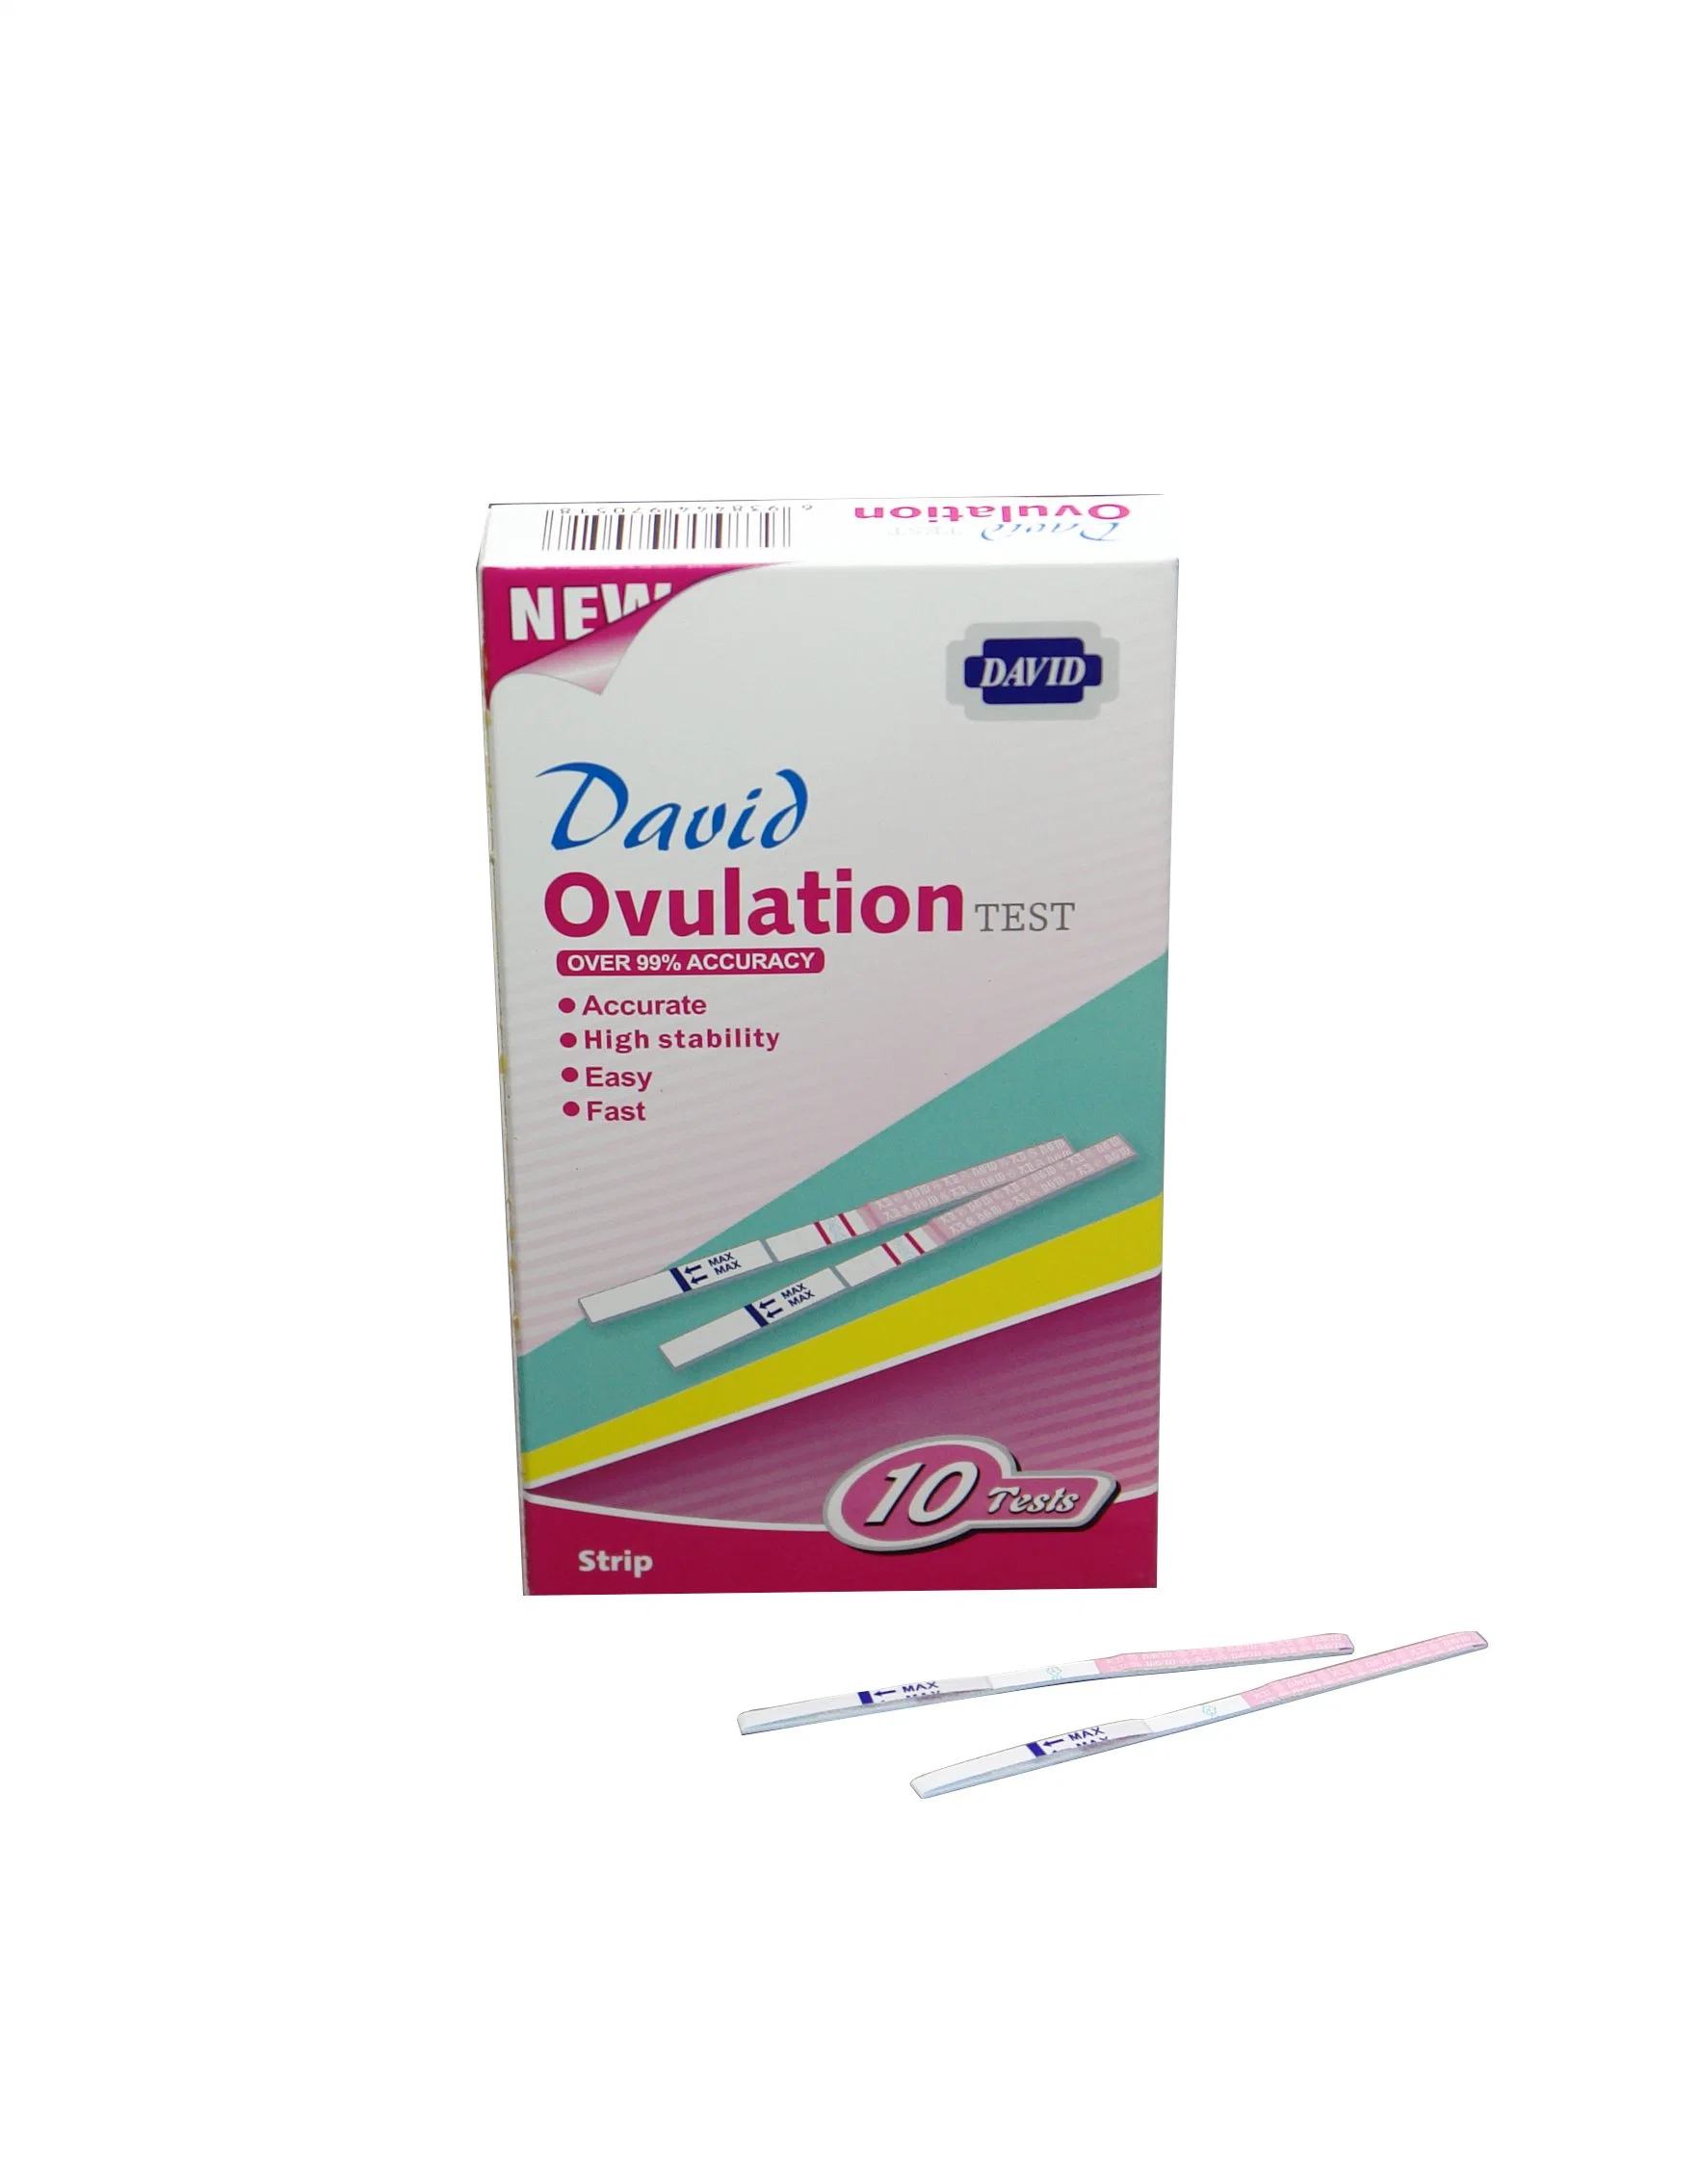 David 99% precisión OEM Home Use orina LH Ovulation Test Kit